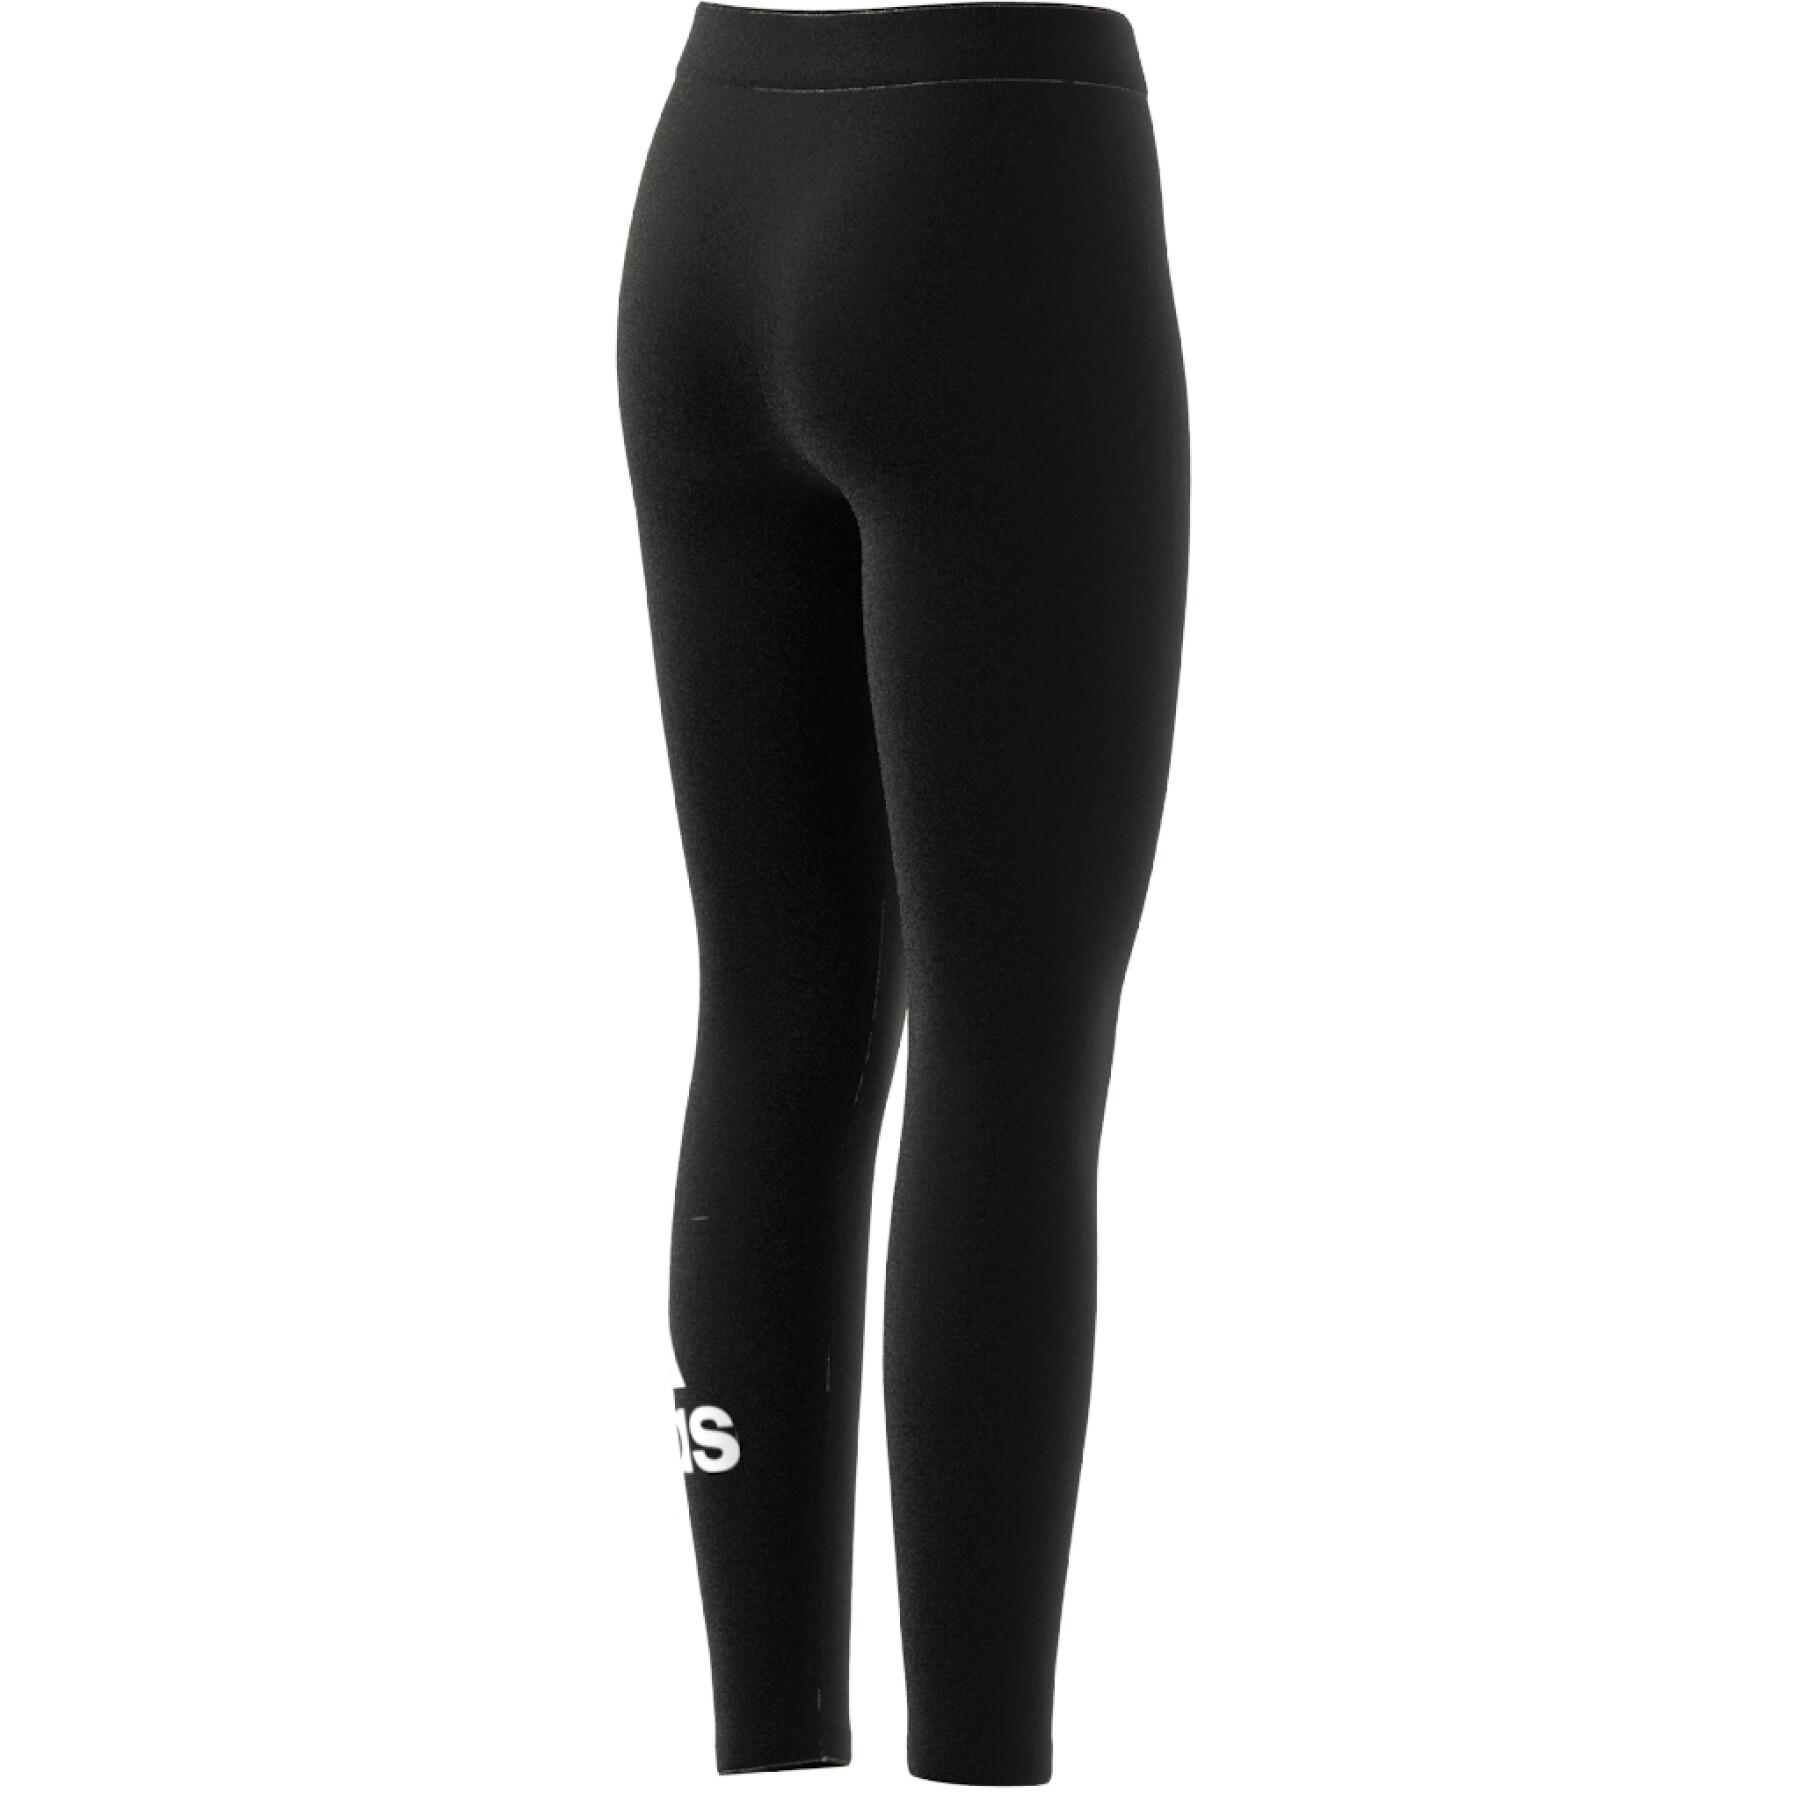 Legging cotton Logo Handball Big - Baselayers Textile girl - Essentials wear adidas 